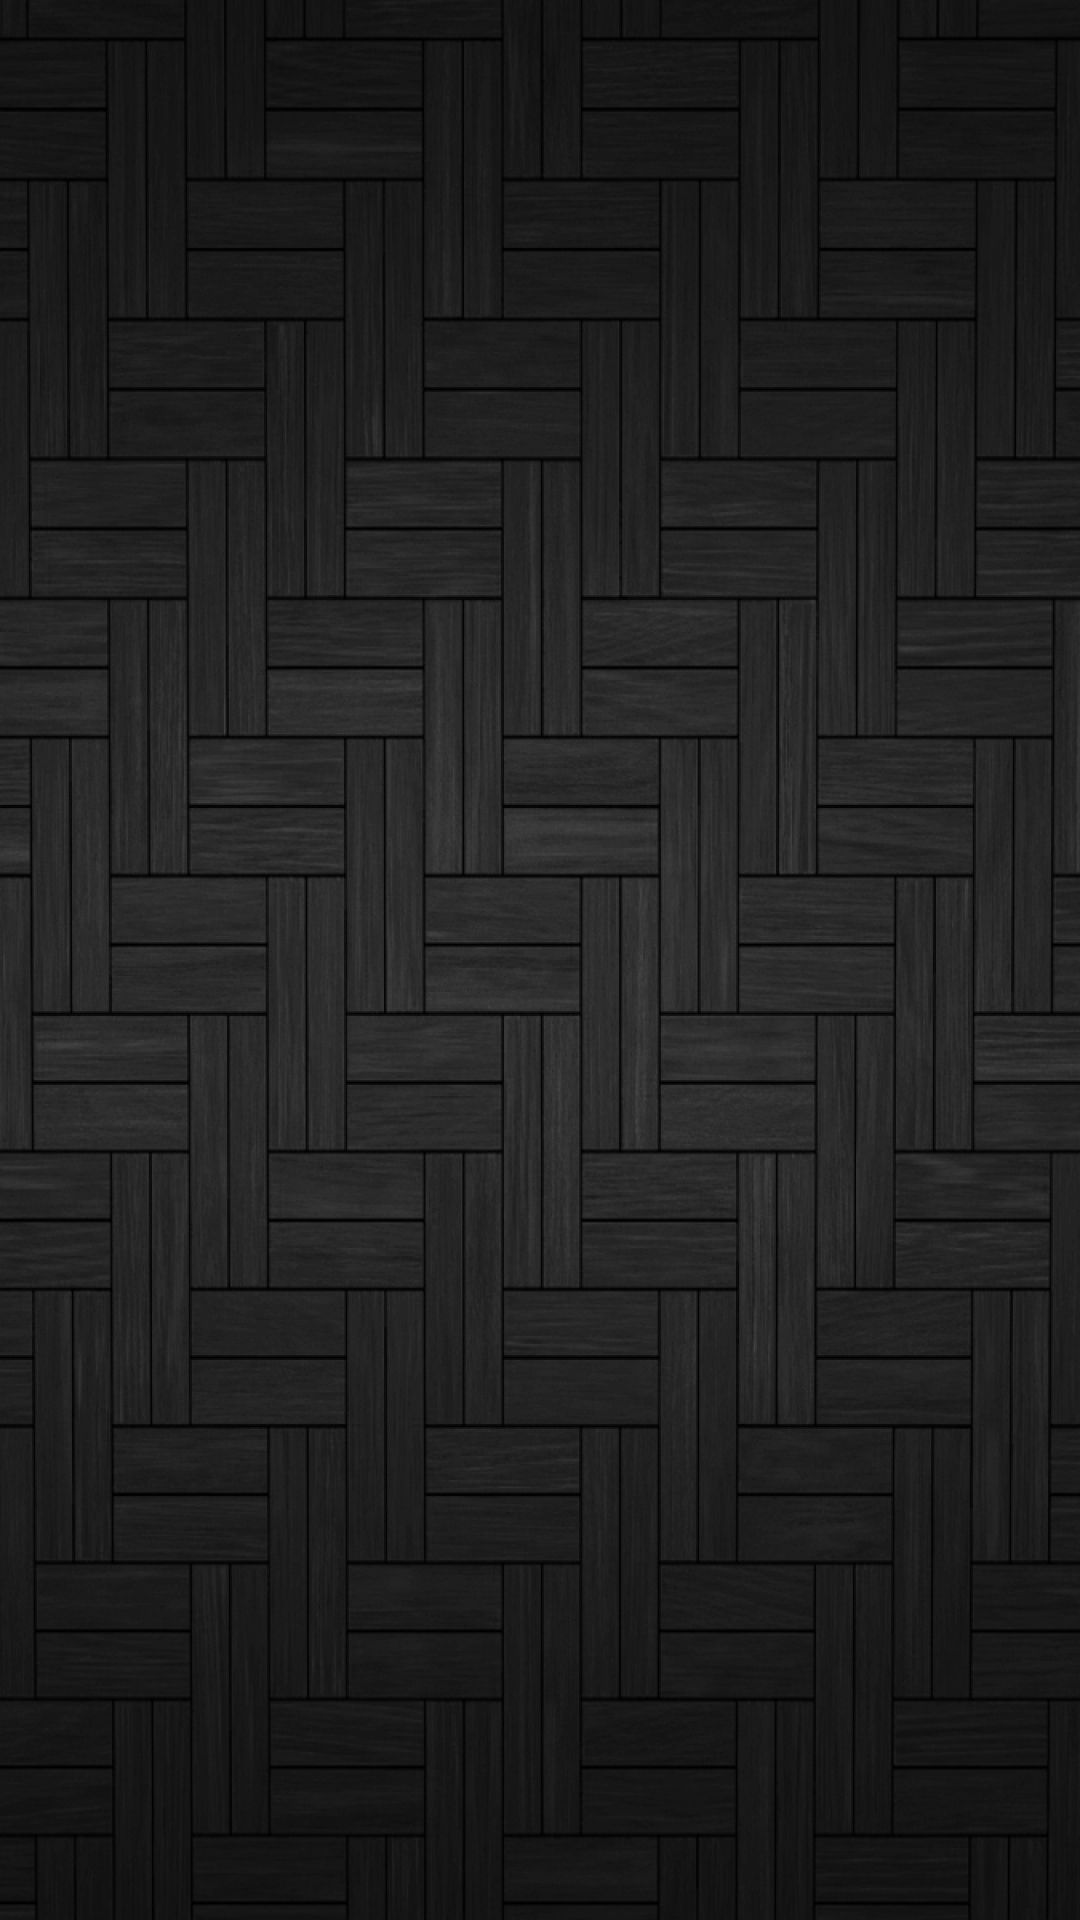 Oppo R7 Wallpaper: Black Floor Mobile Android Wallpapers